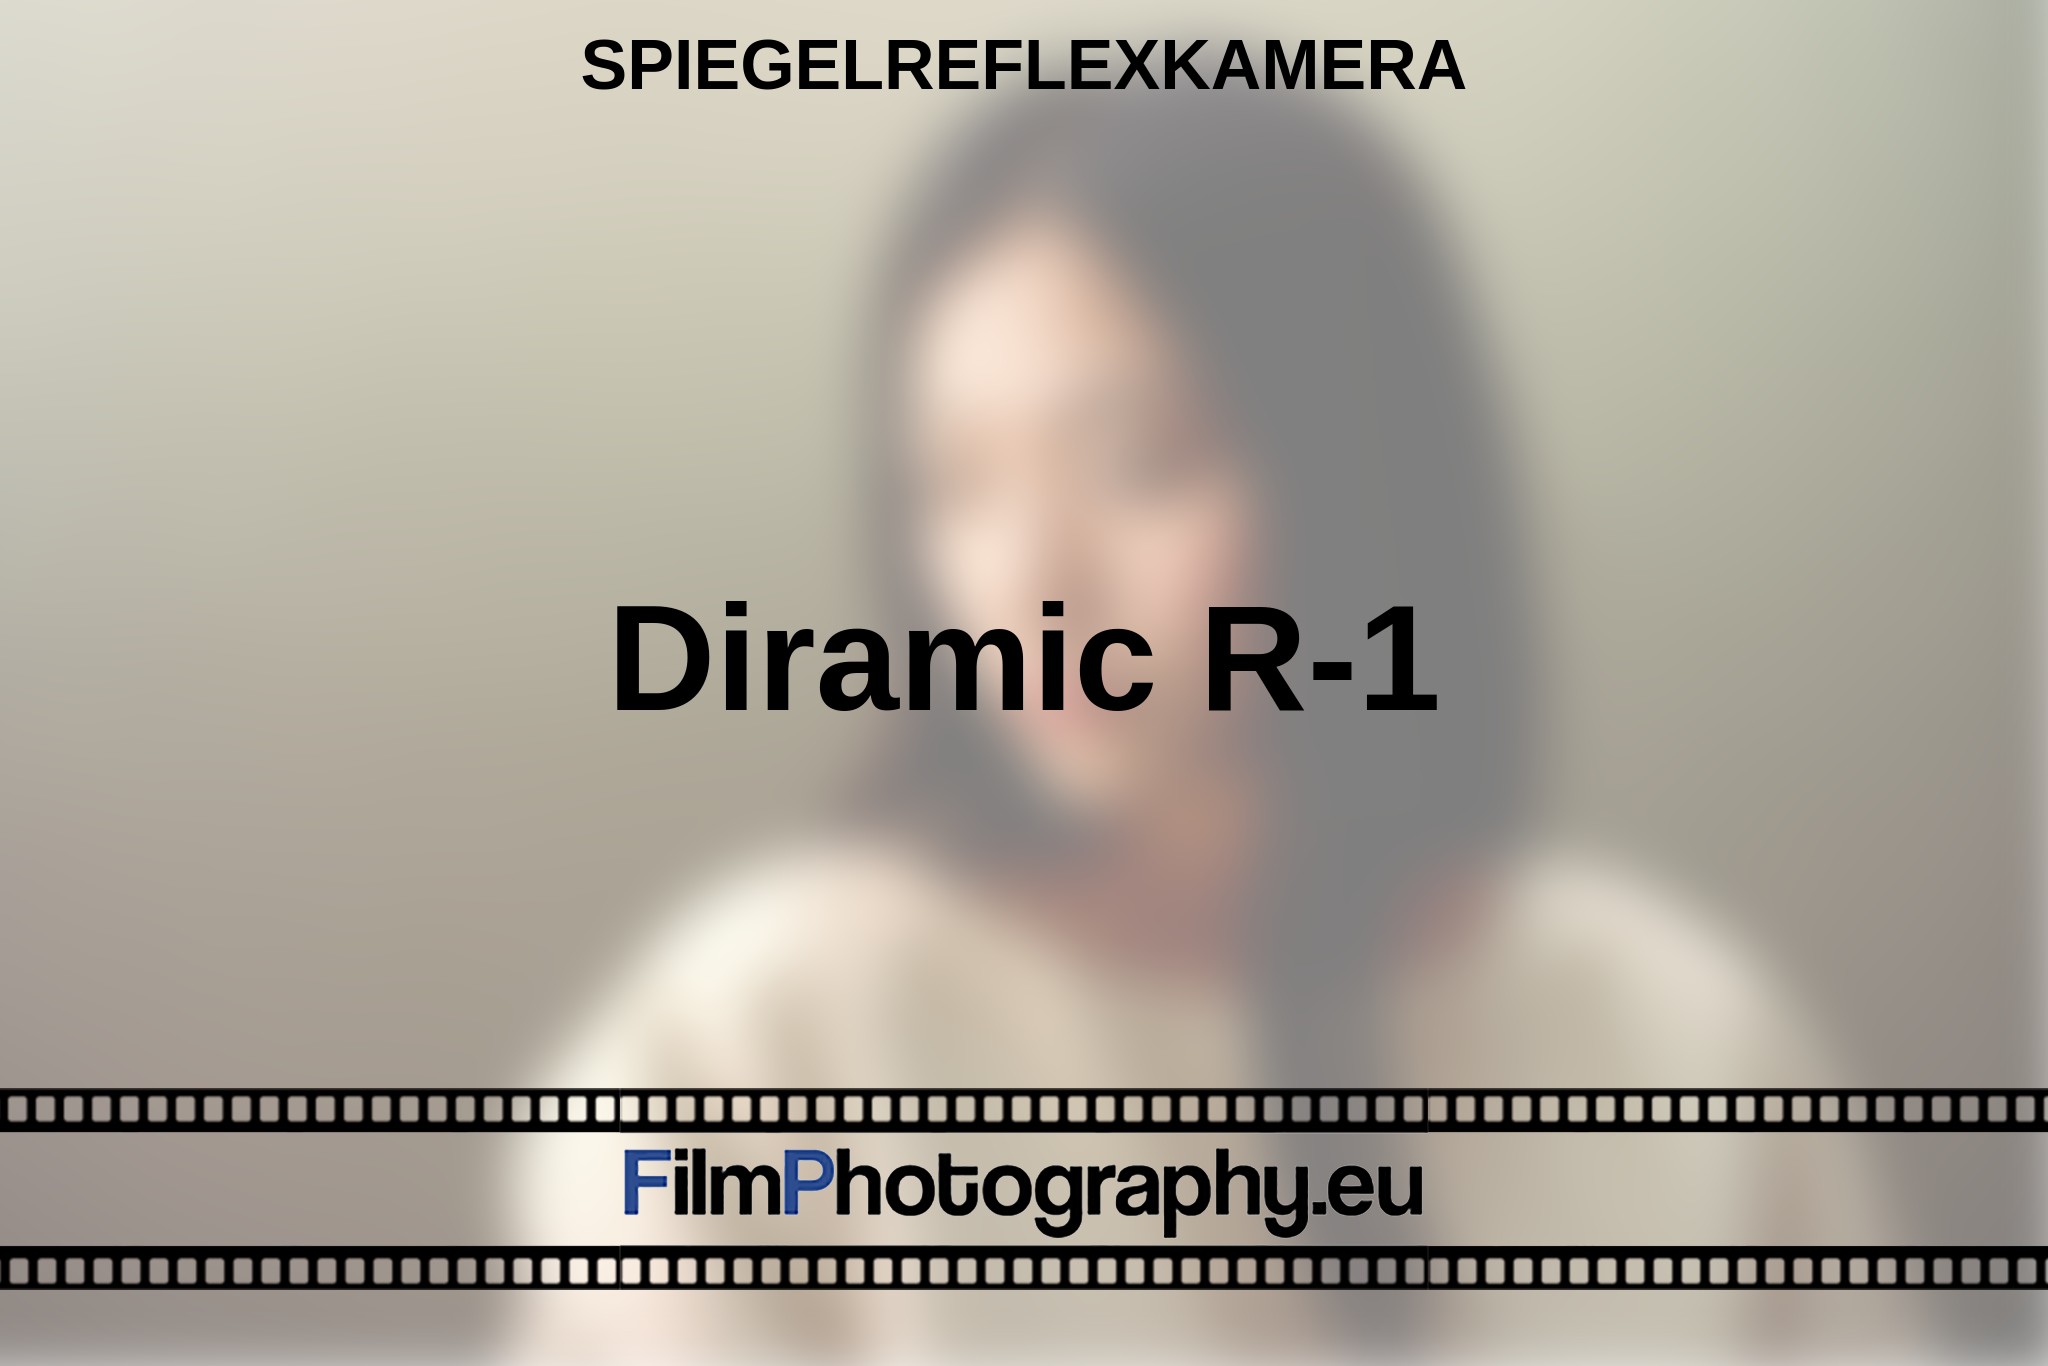 diramic-r-1-spiegelreflexkamera-bnv.jpg